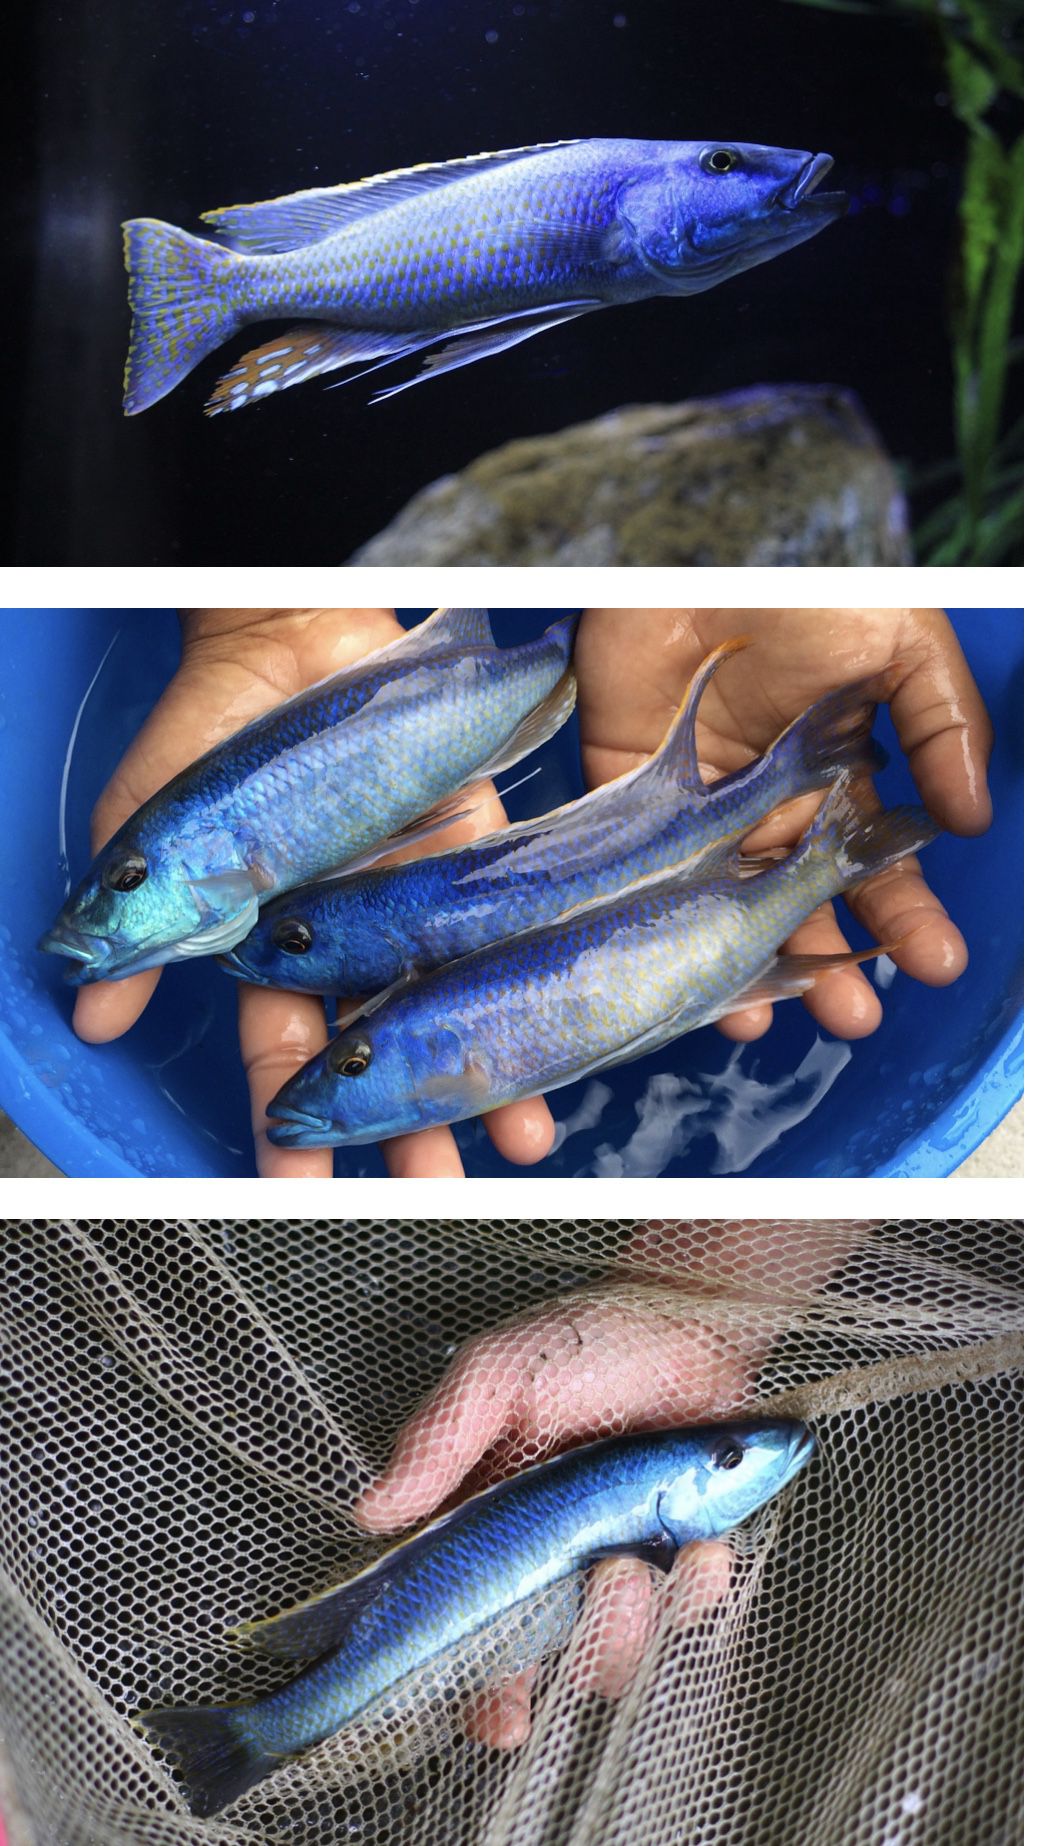 Malawi trout (Champsochromis) 3”